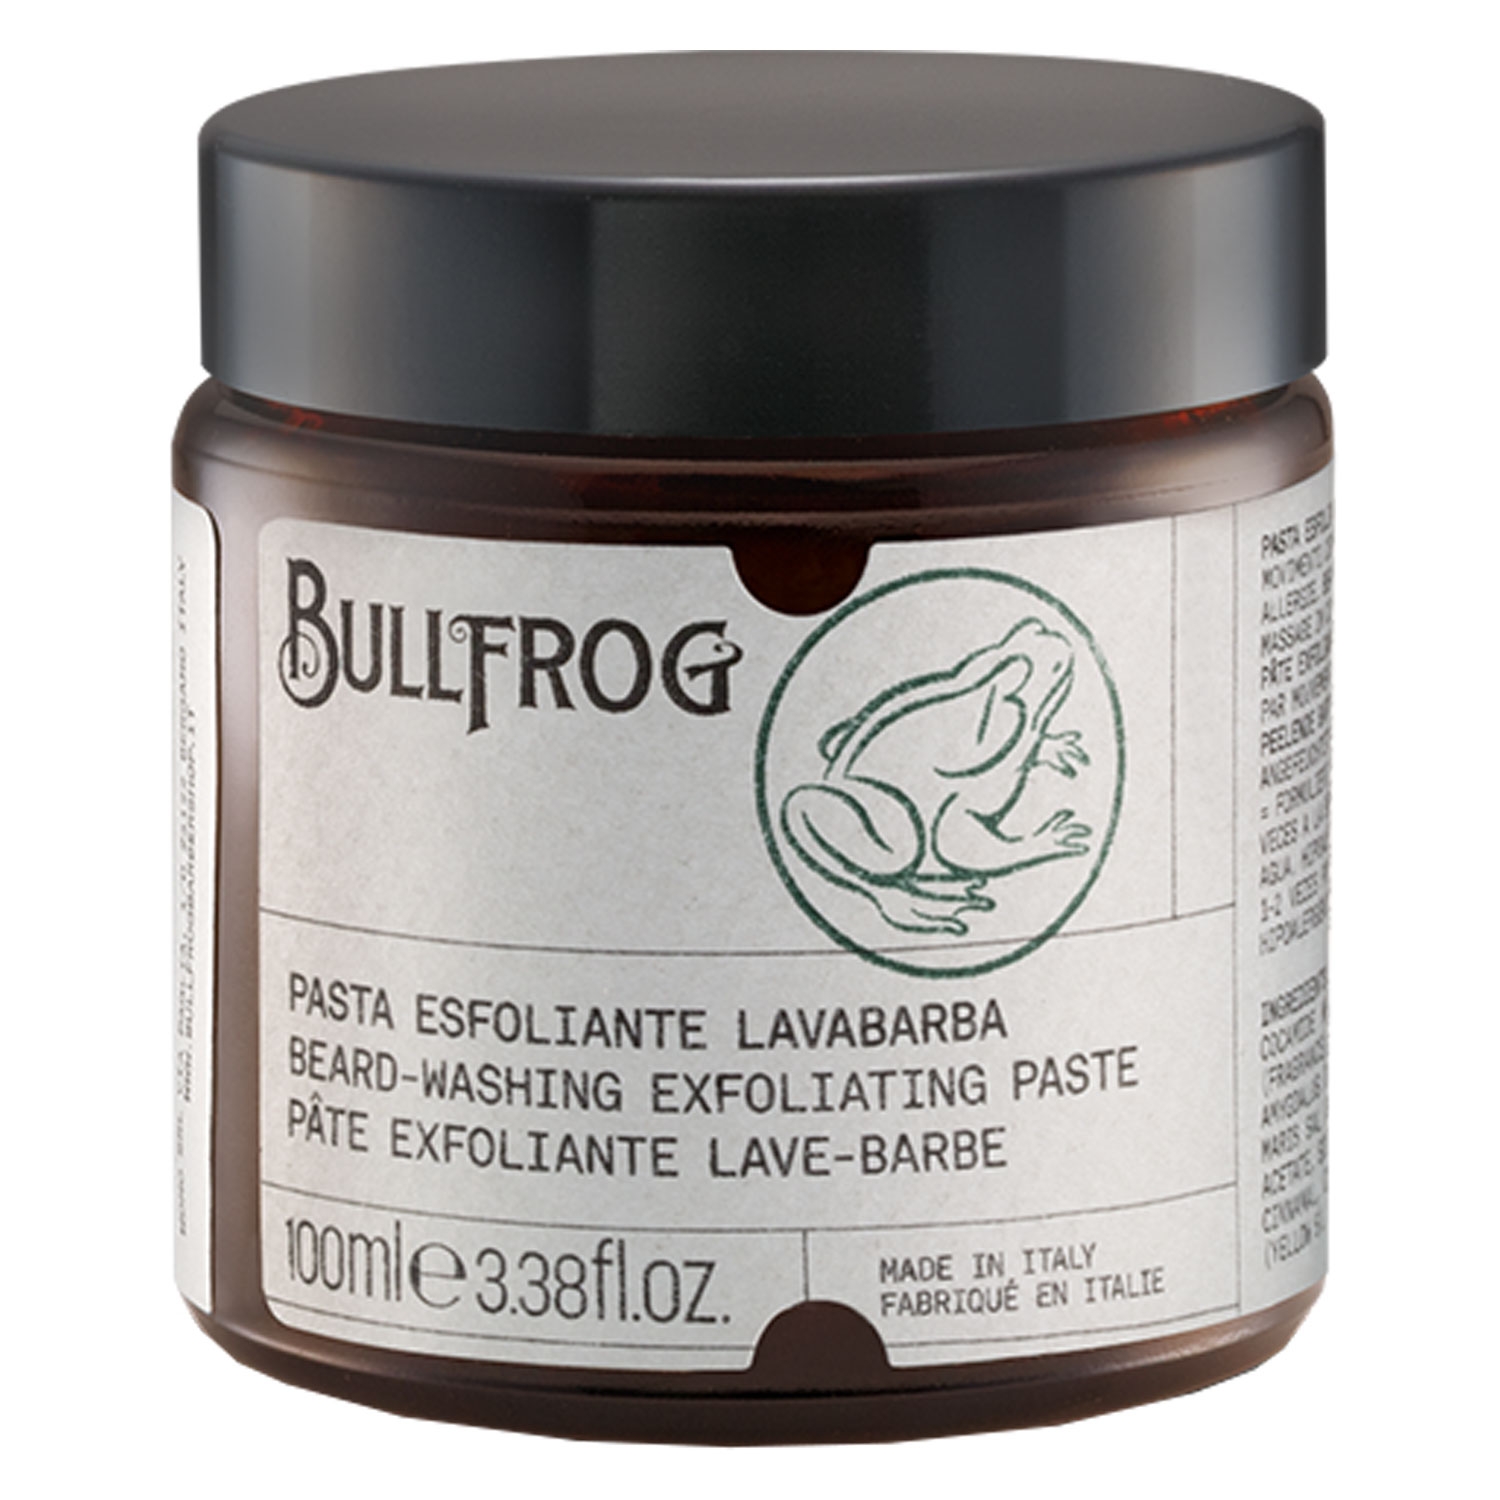 Product image from BULLFROG - Beard-Washing Exfoliating Paste